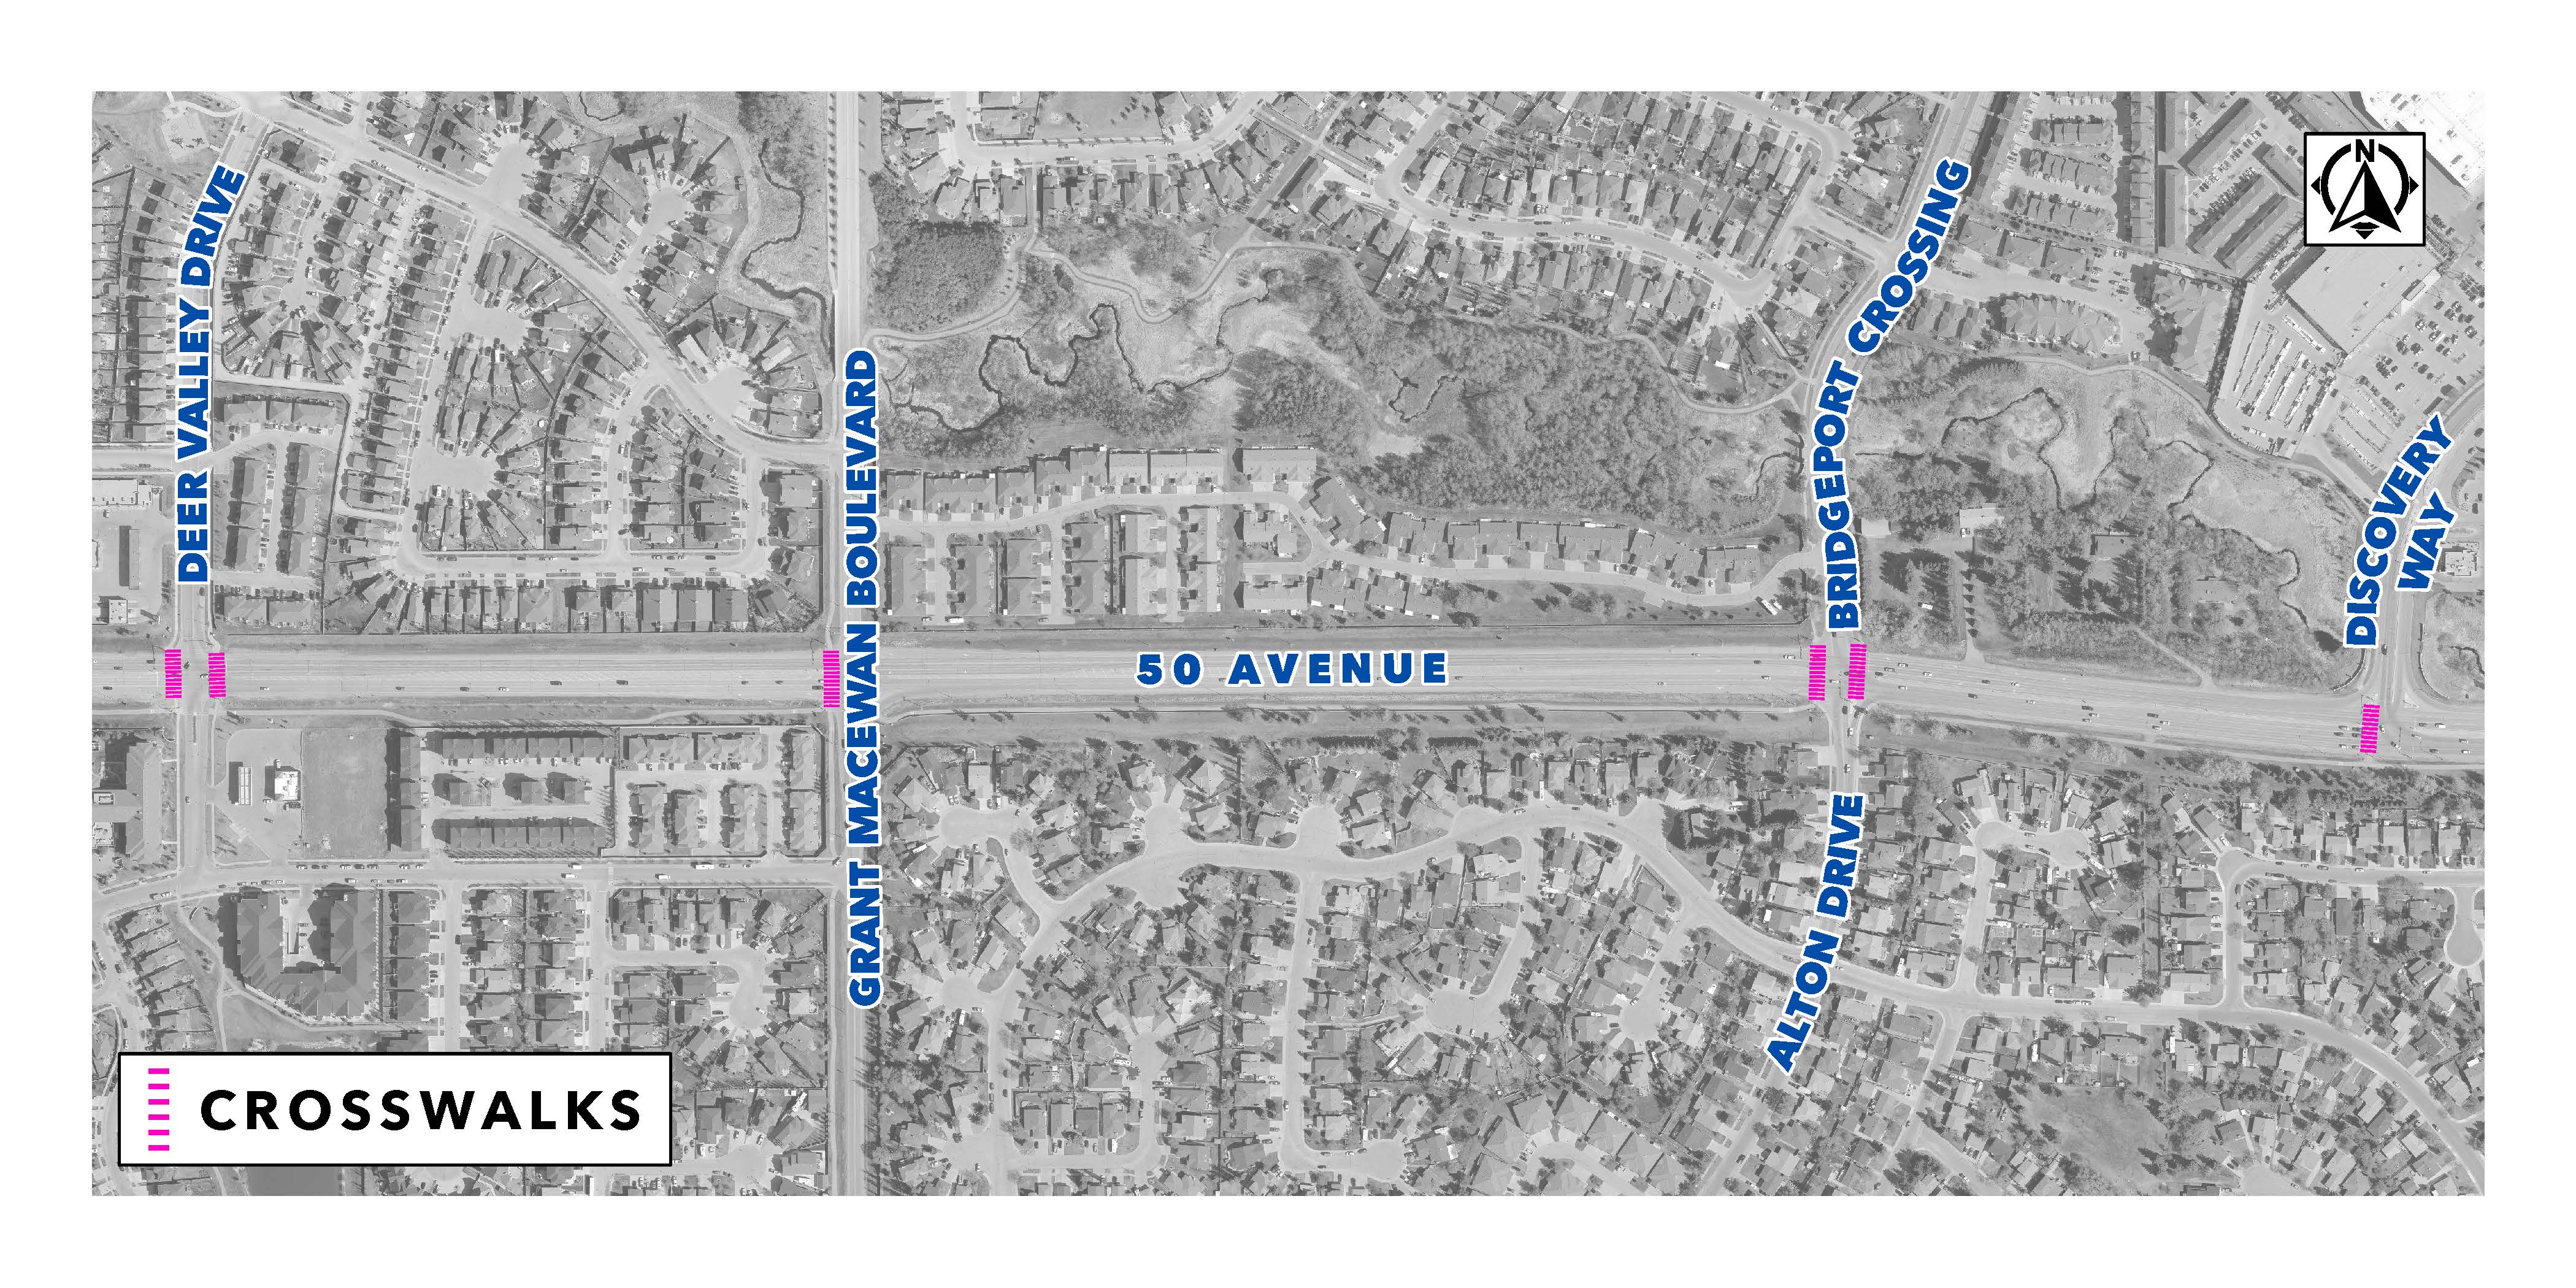 Marked crosswalks  six crosswalks along 50 Avenue from Discovery Way to Deer Valley Drive